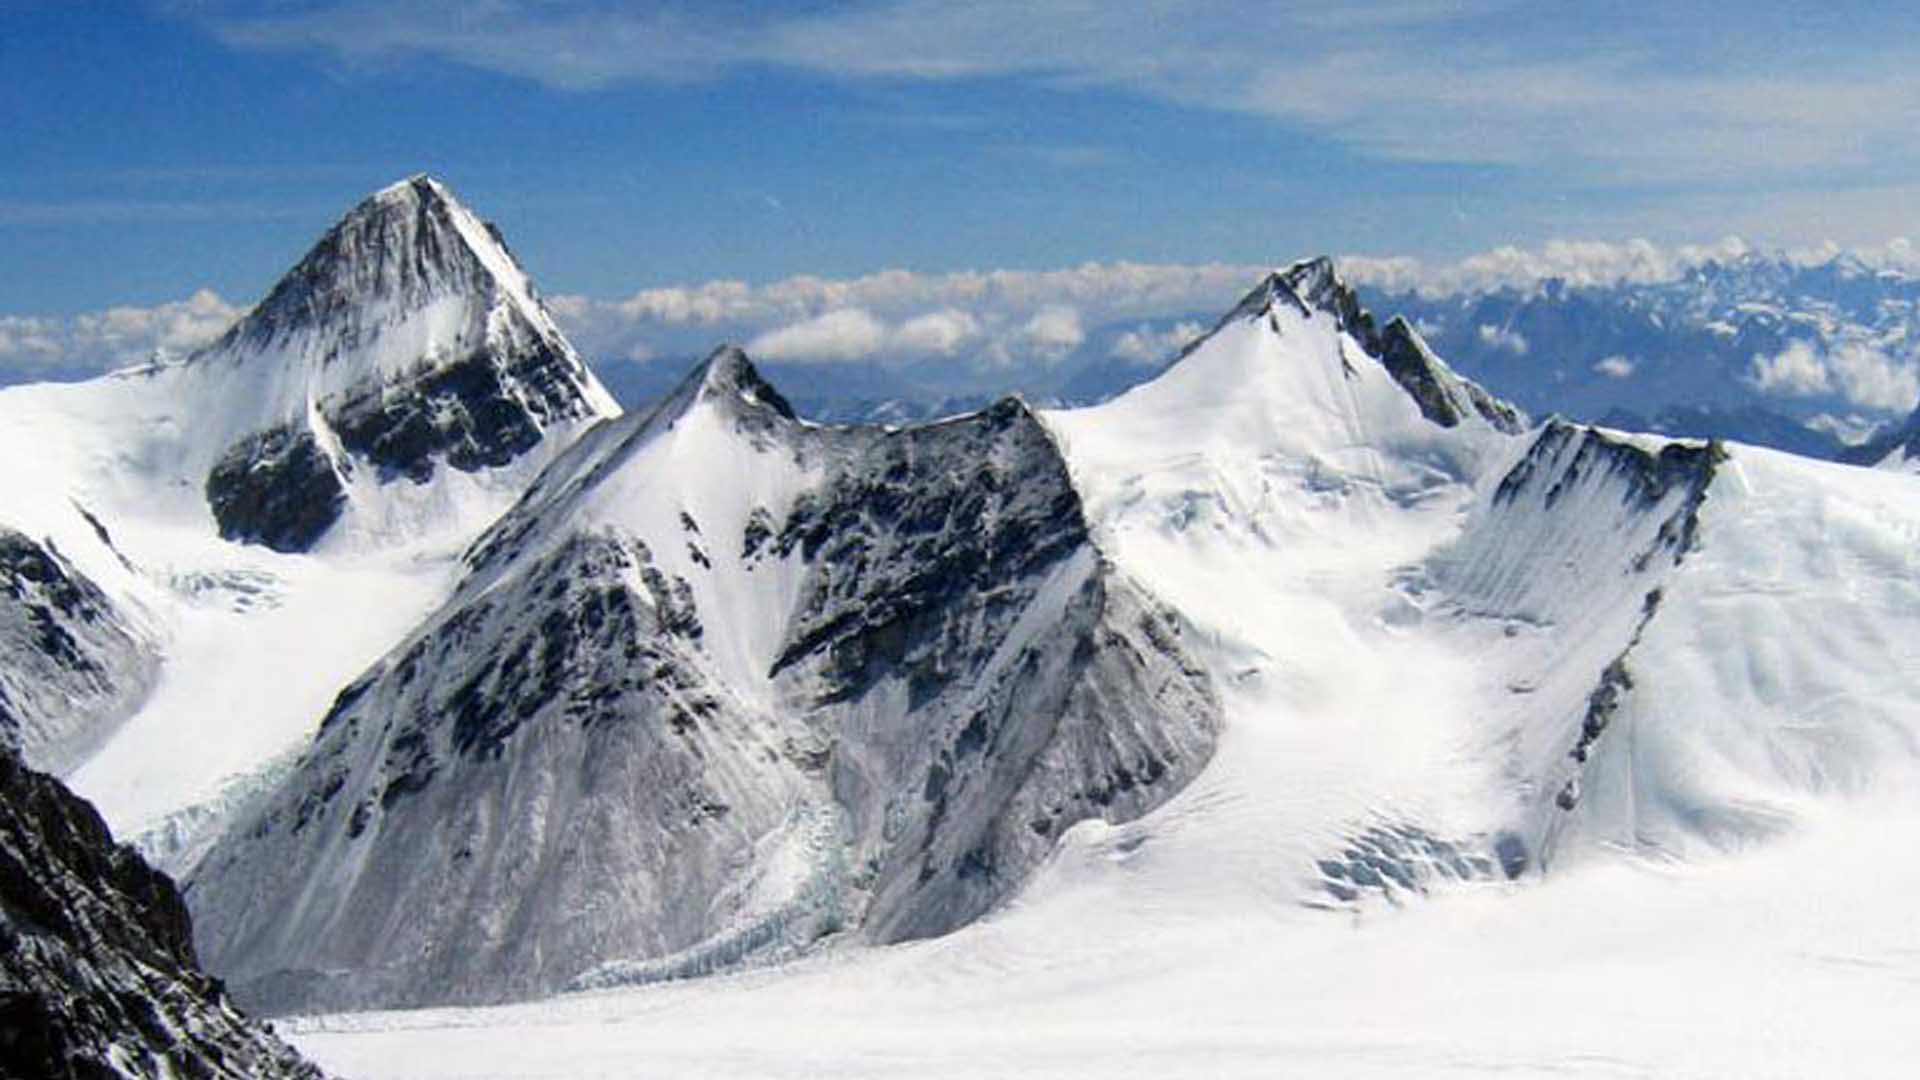 Mt. Lhakpa Ri Expedition (7,045m.)